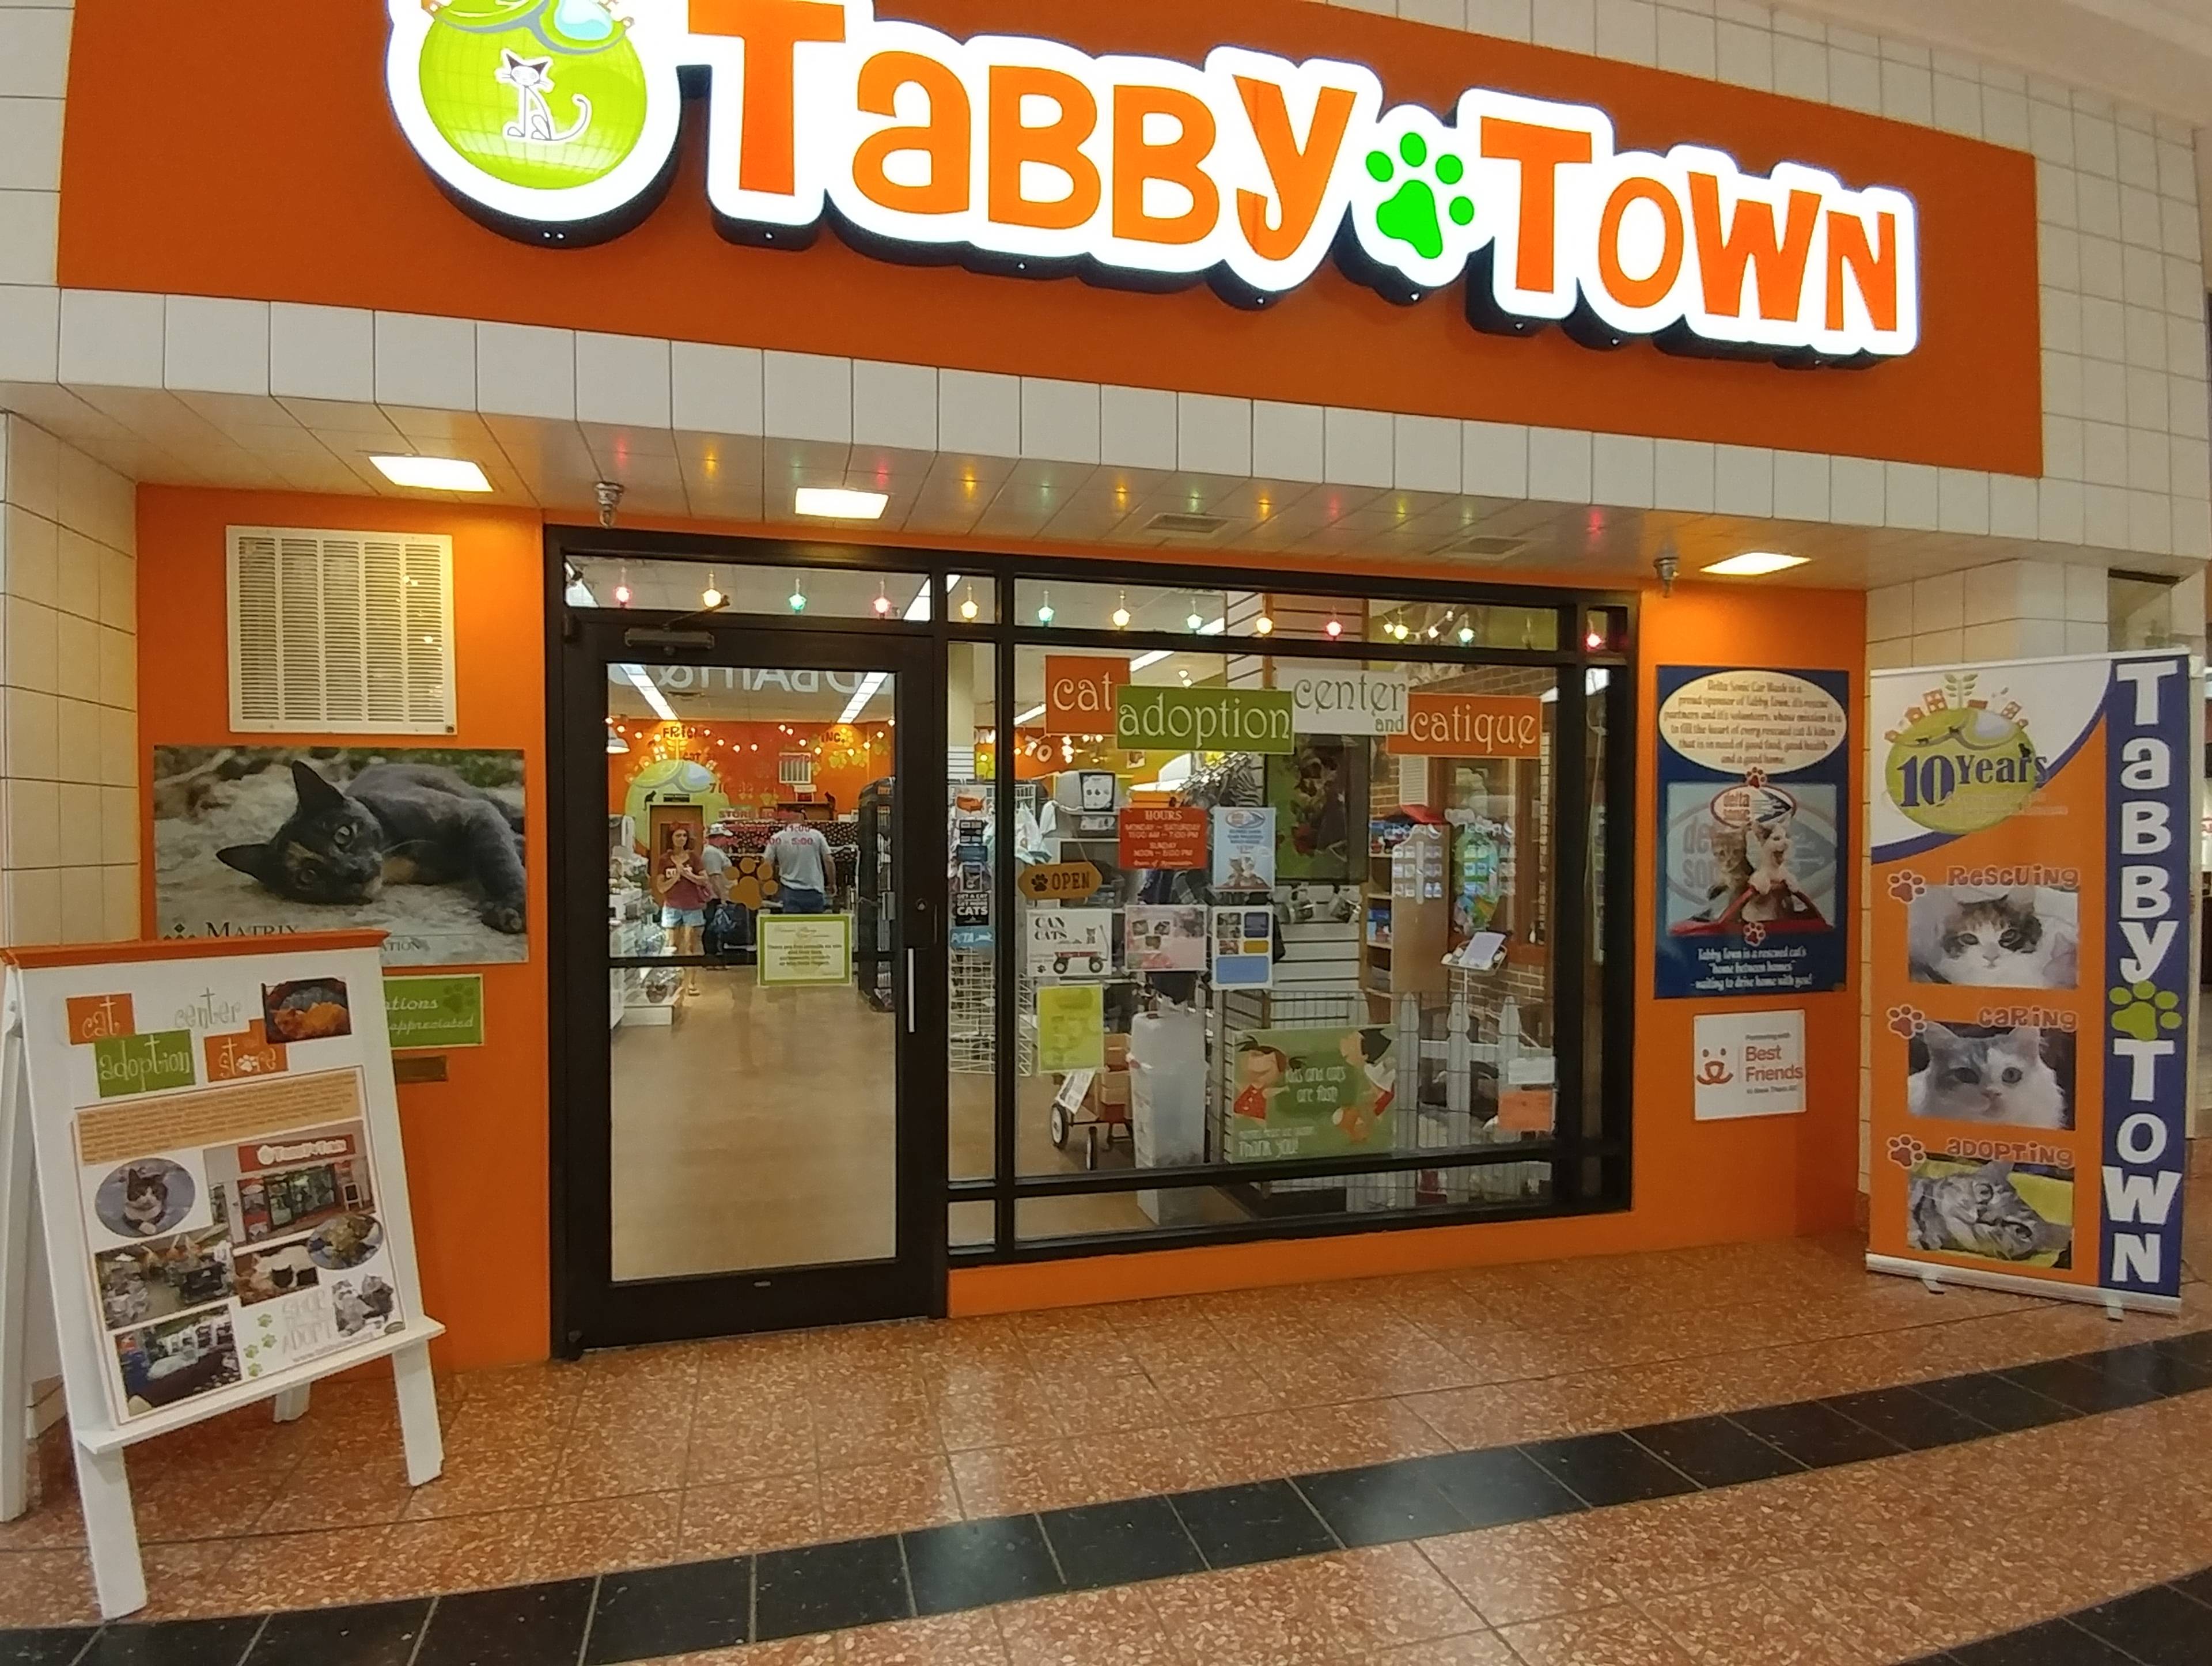 Tabby Town (Friends for Felines, Inc.)